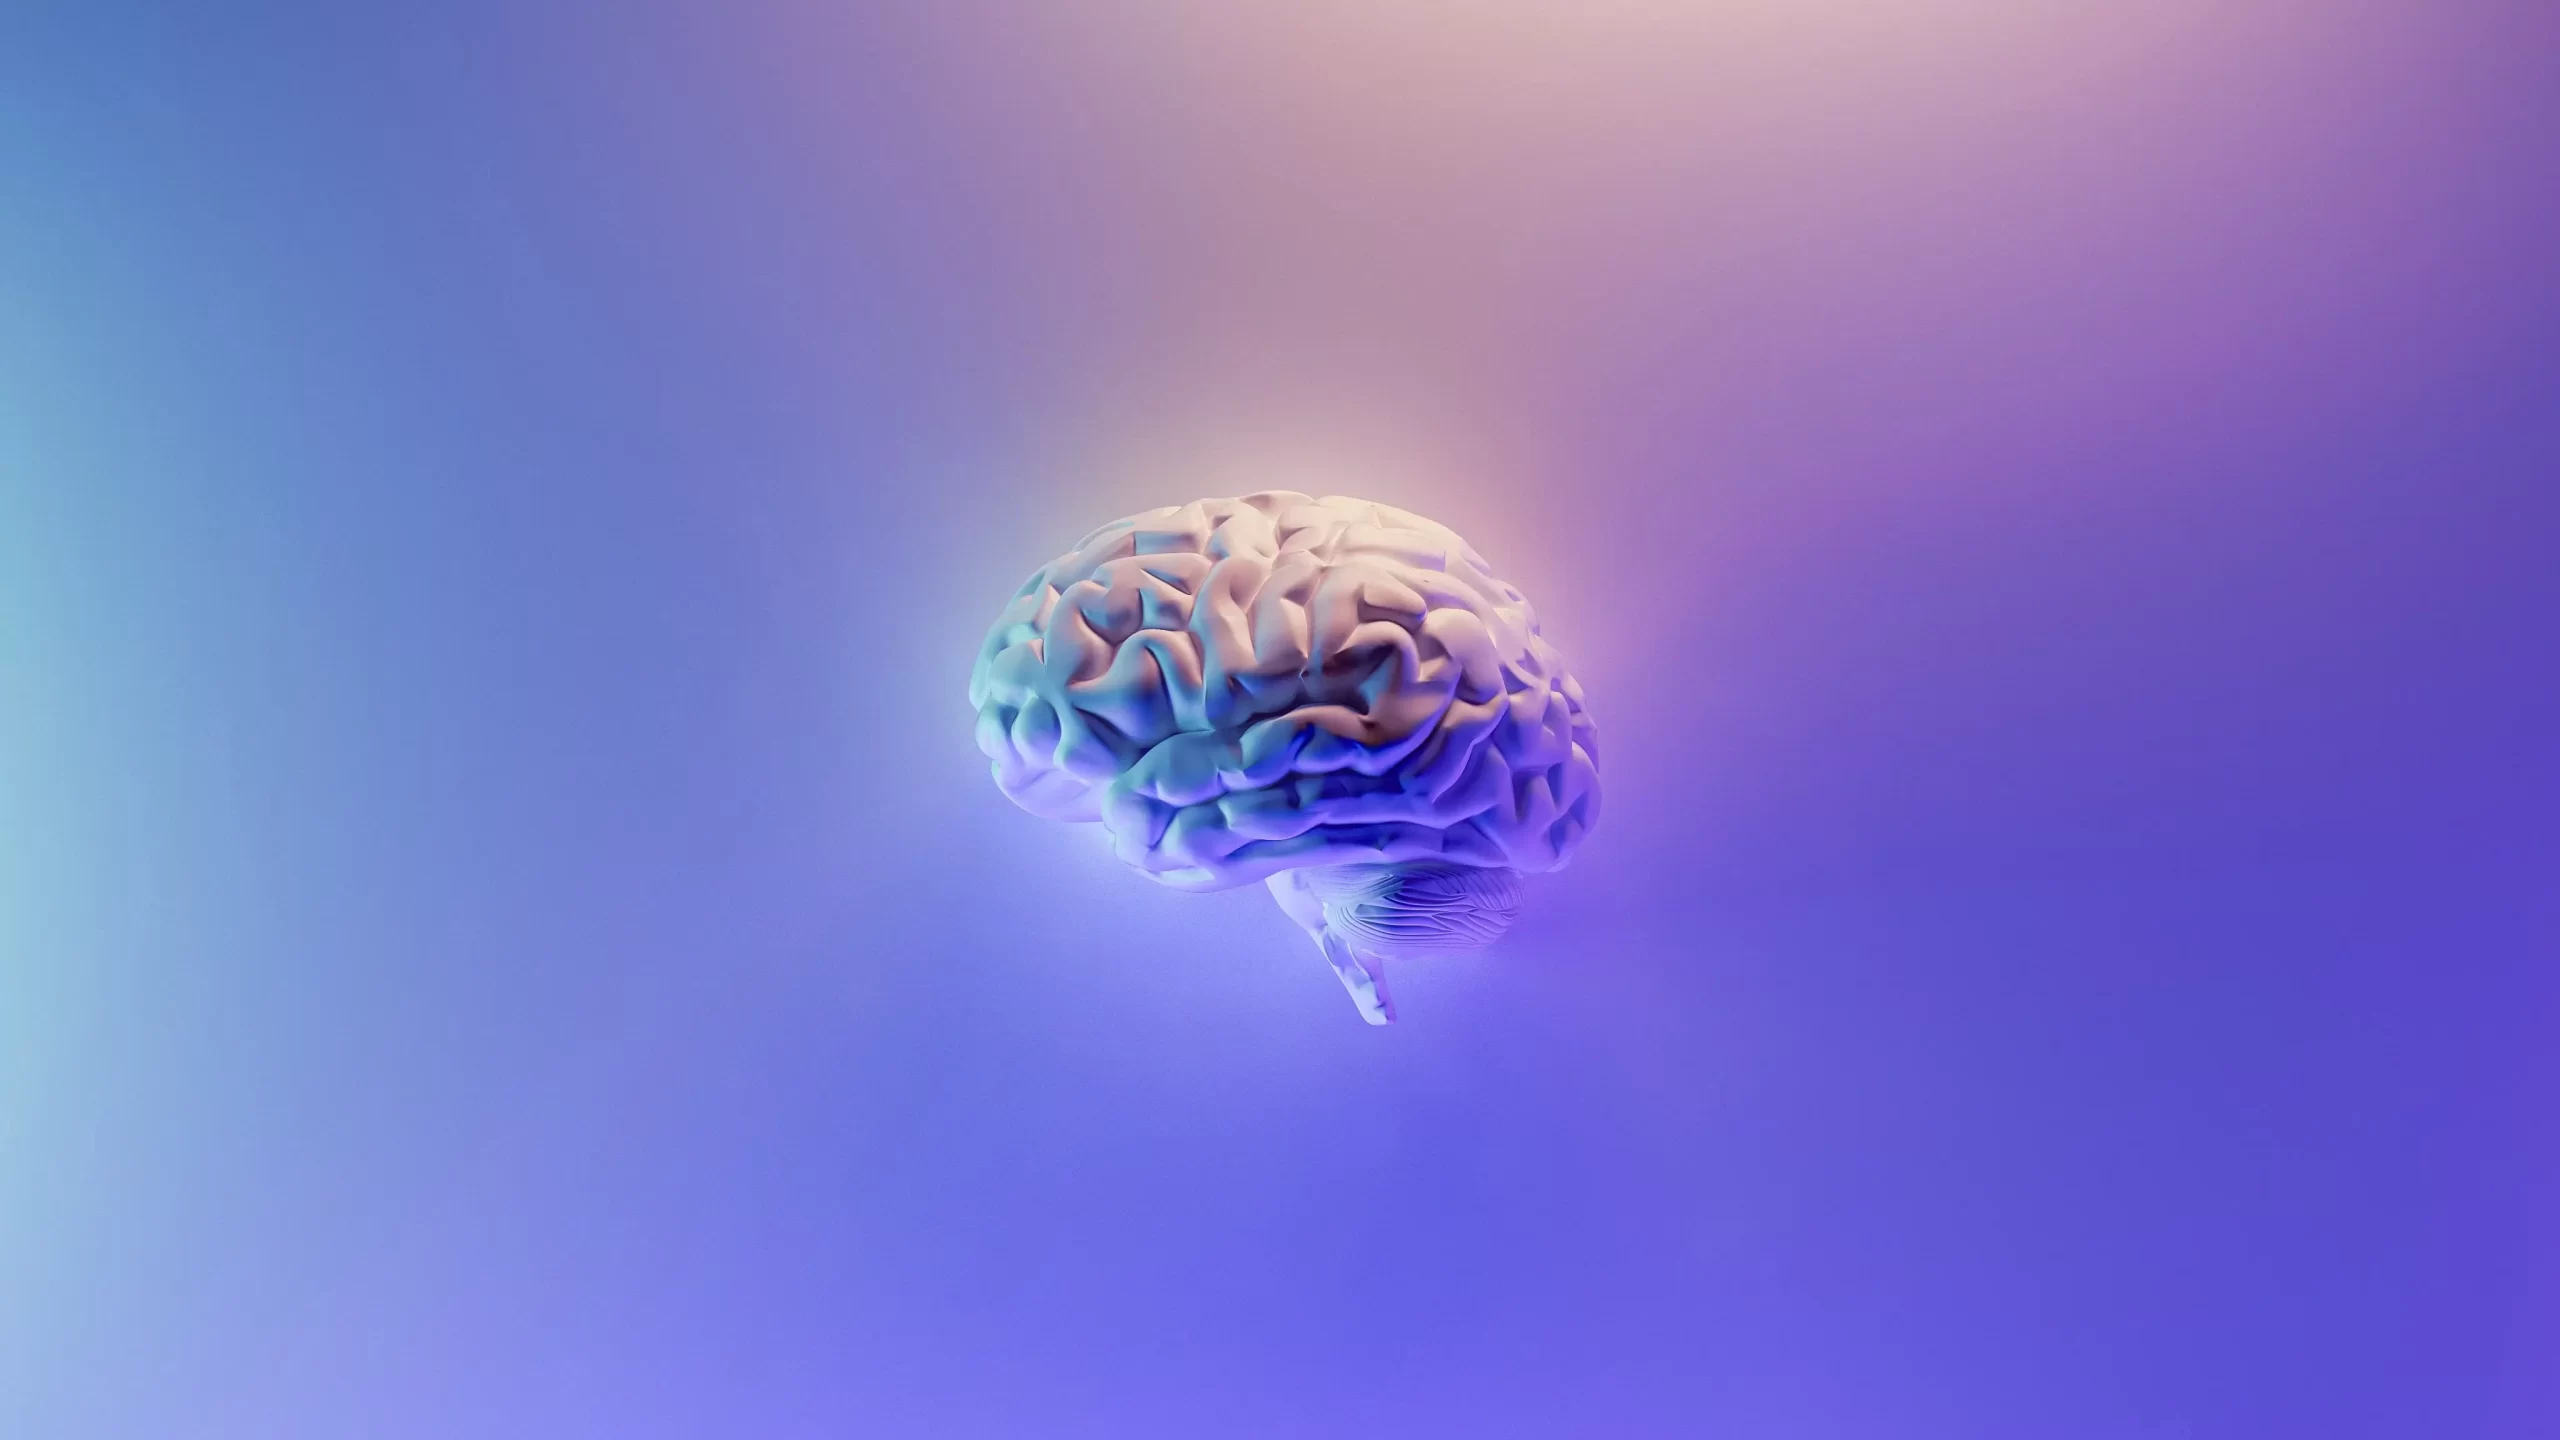 A 3d image of a brain